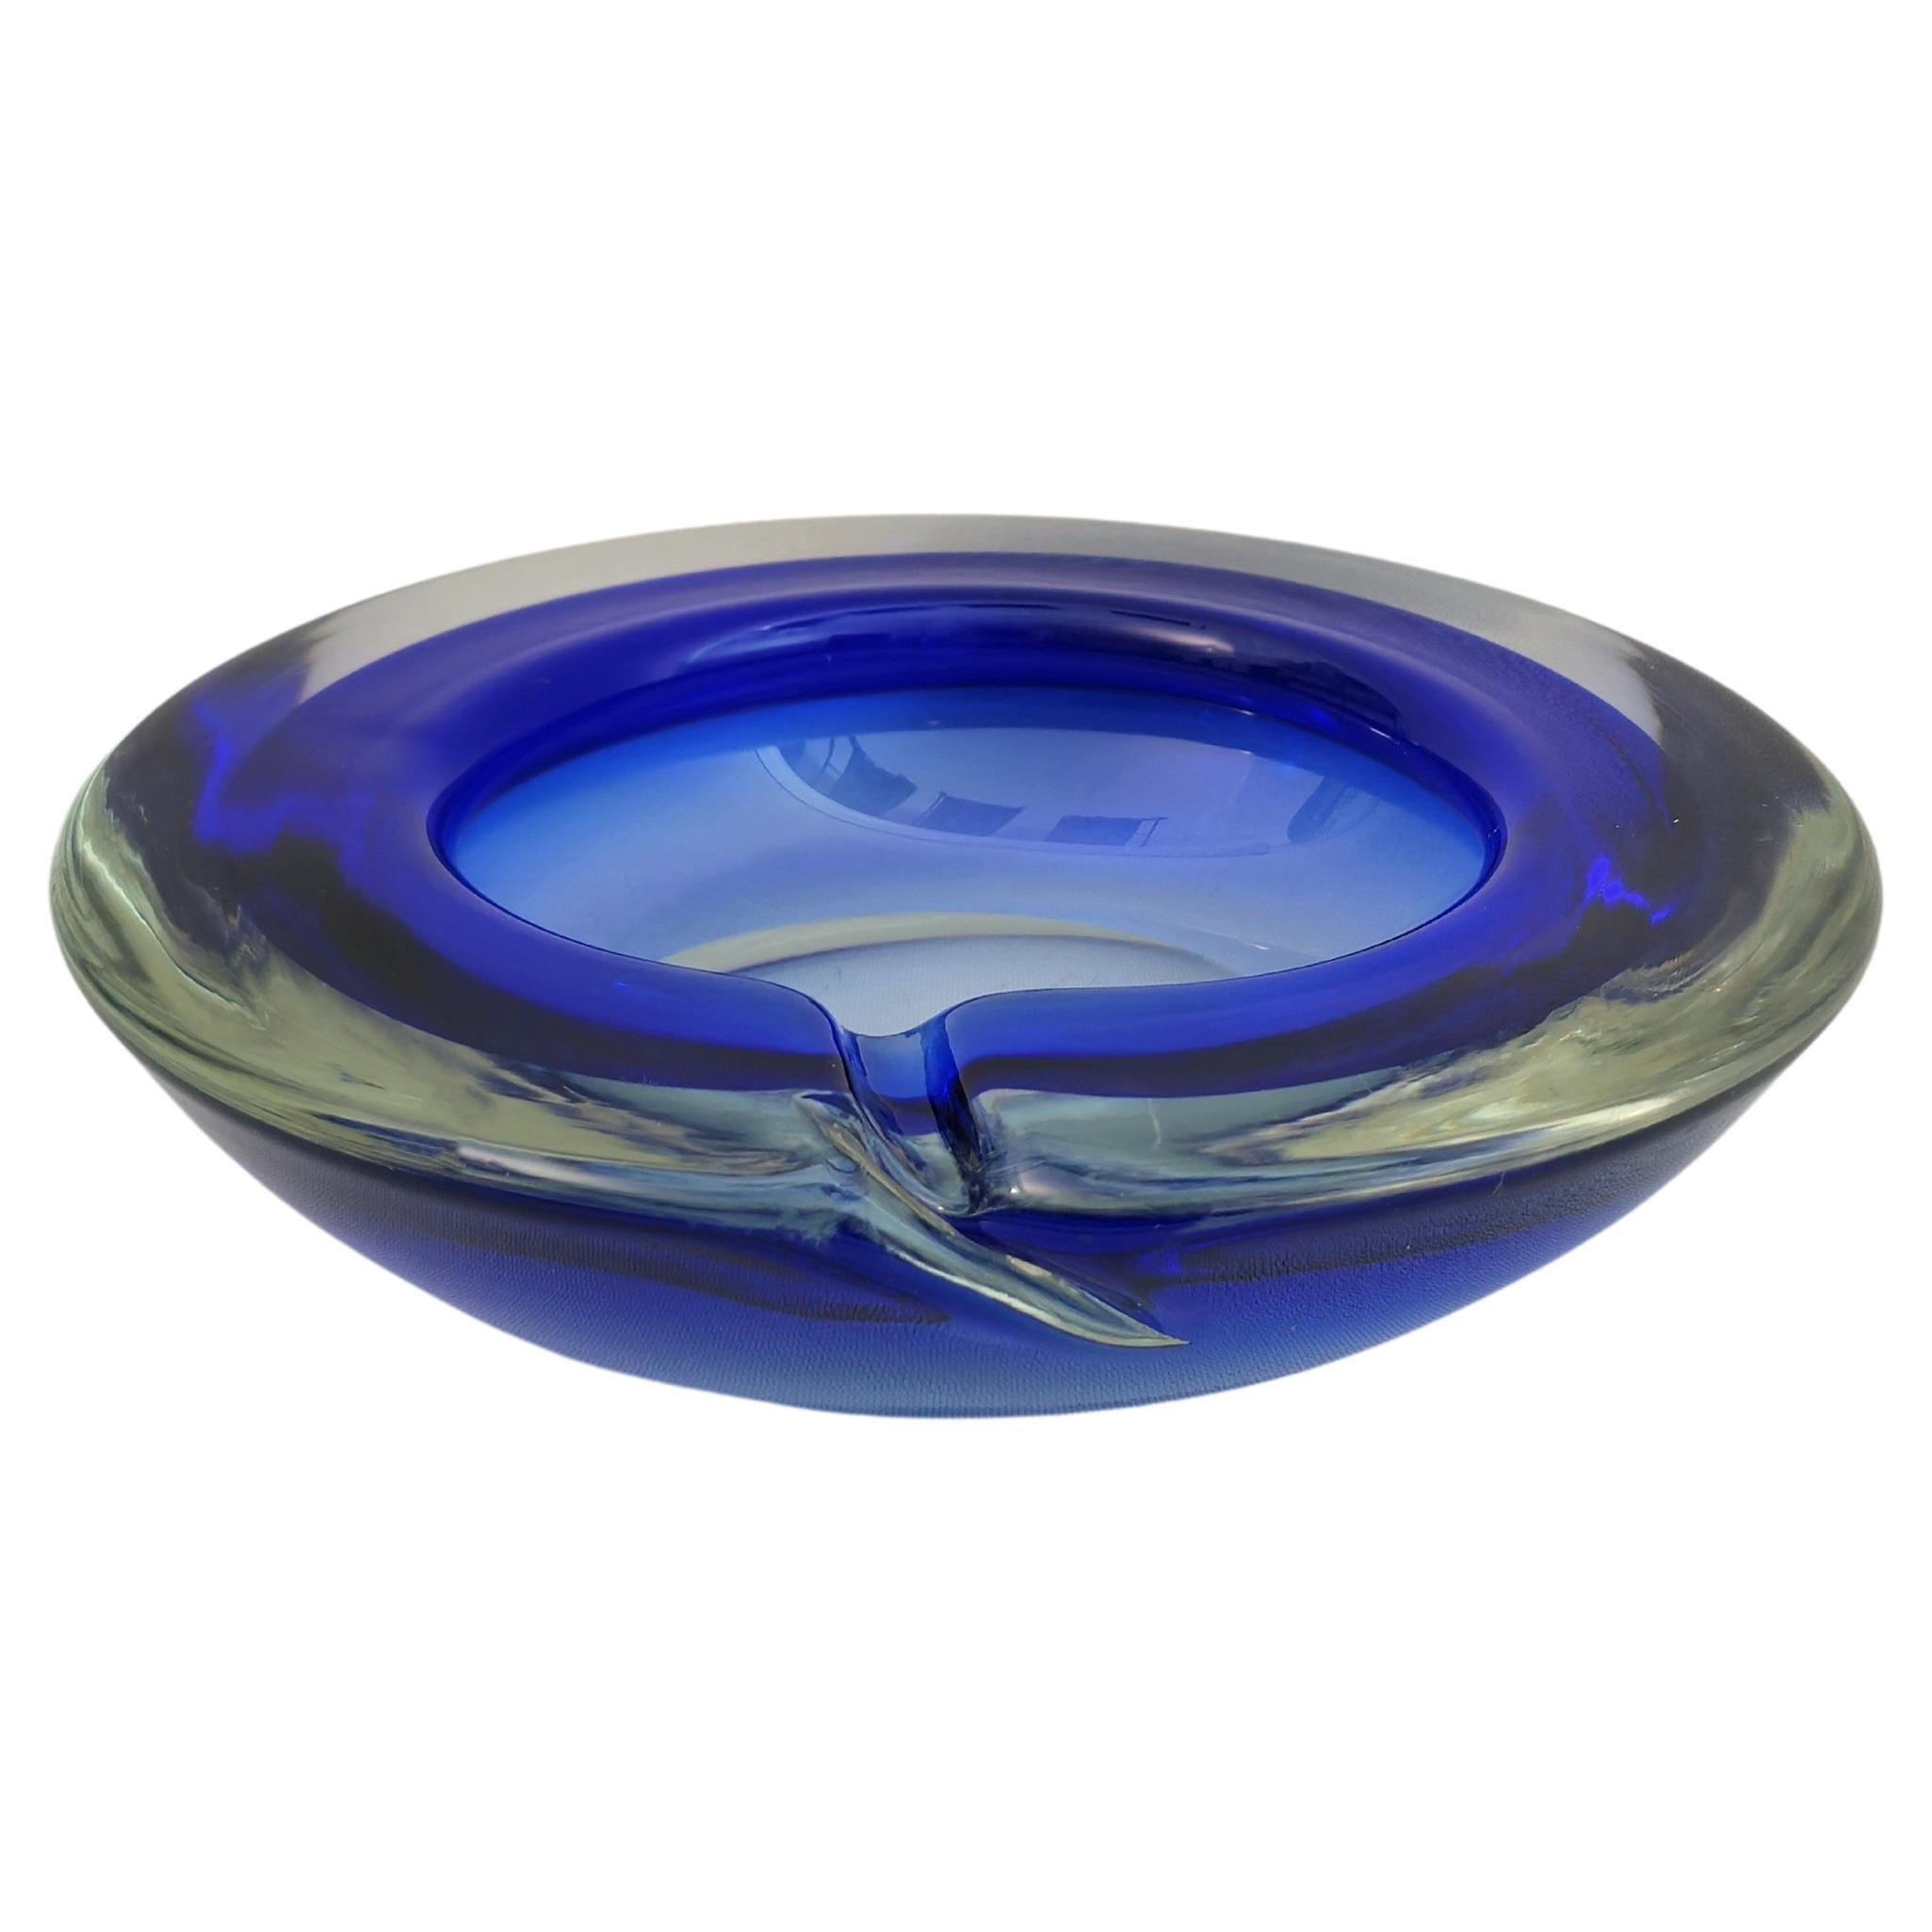 Ashtray Murano Glass Blue Transparent Midcentury Modern Italian Design 1960s